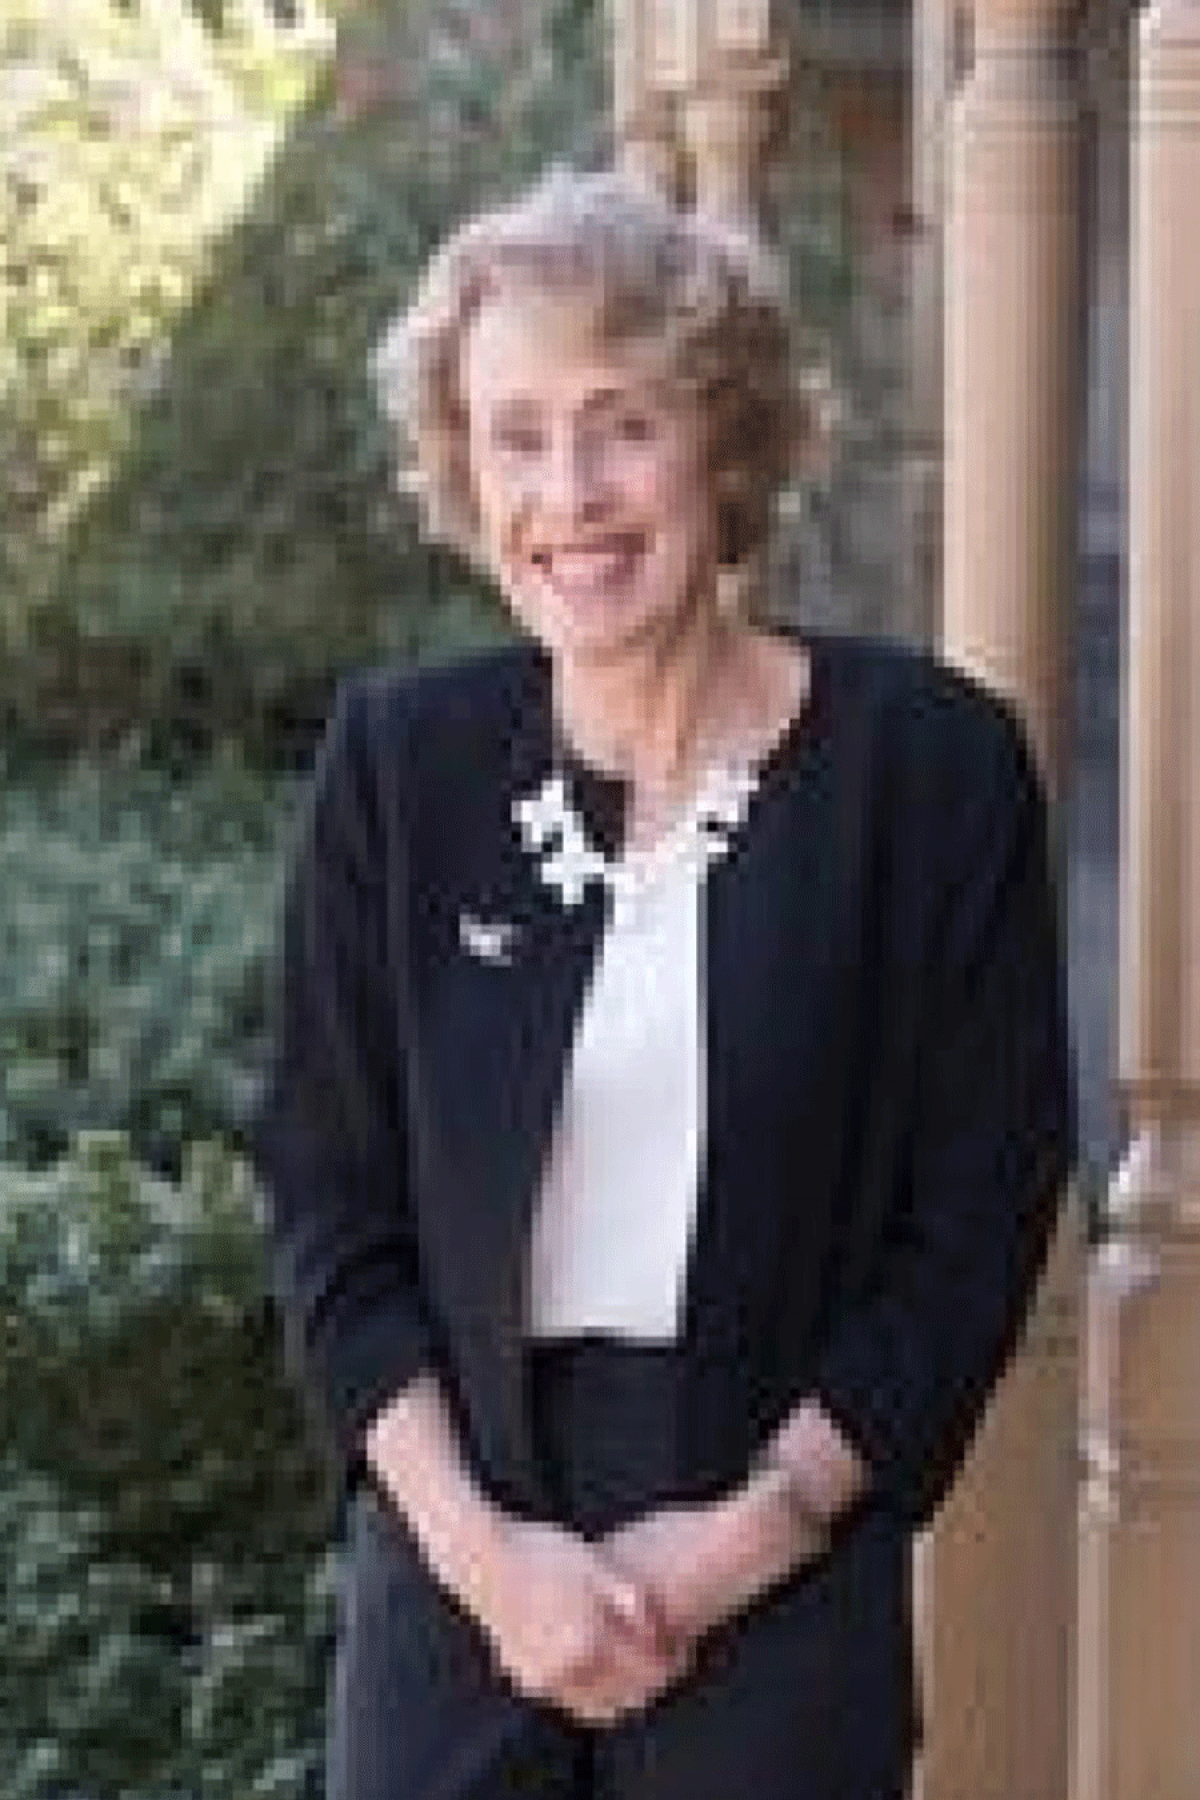 Professor Jennifer Couper